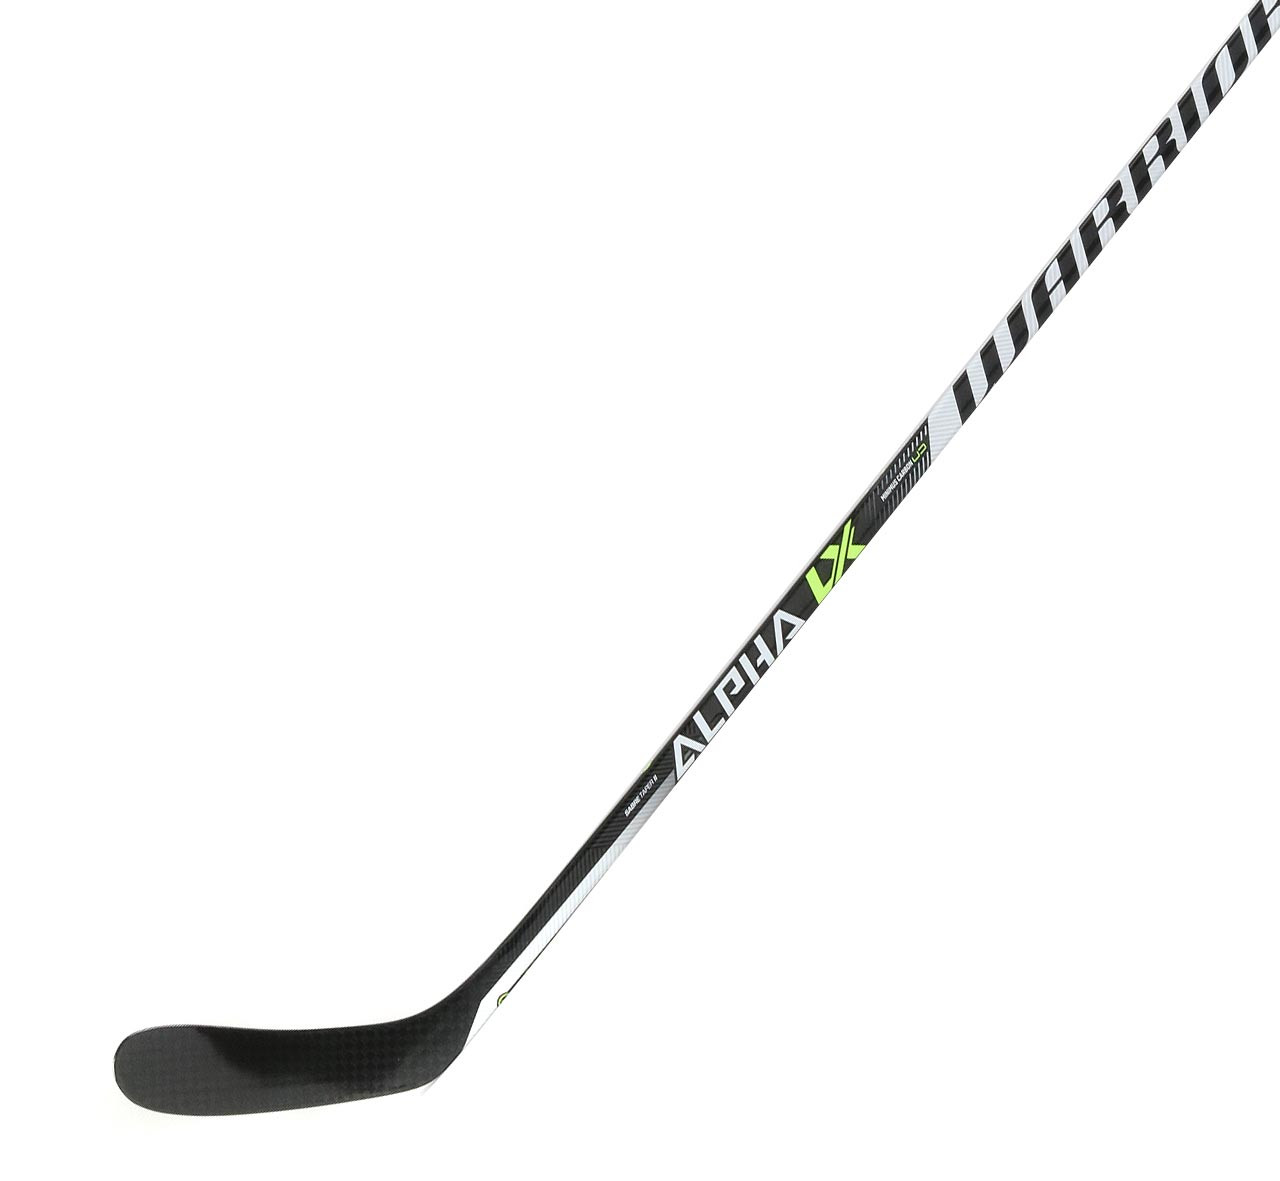 Right - Alpha LXT 50 Flex Junior Stick - W28 - Pro Stock Hockey